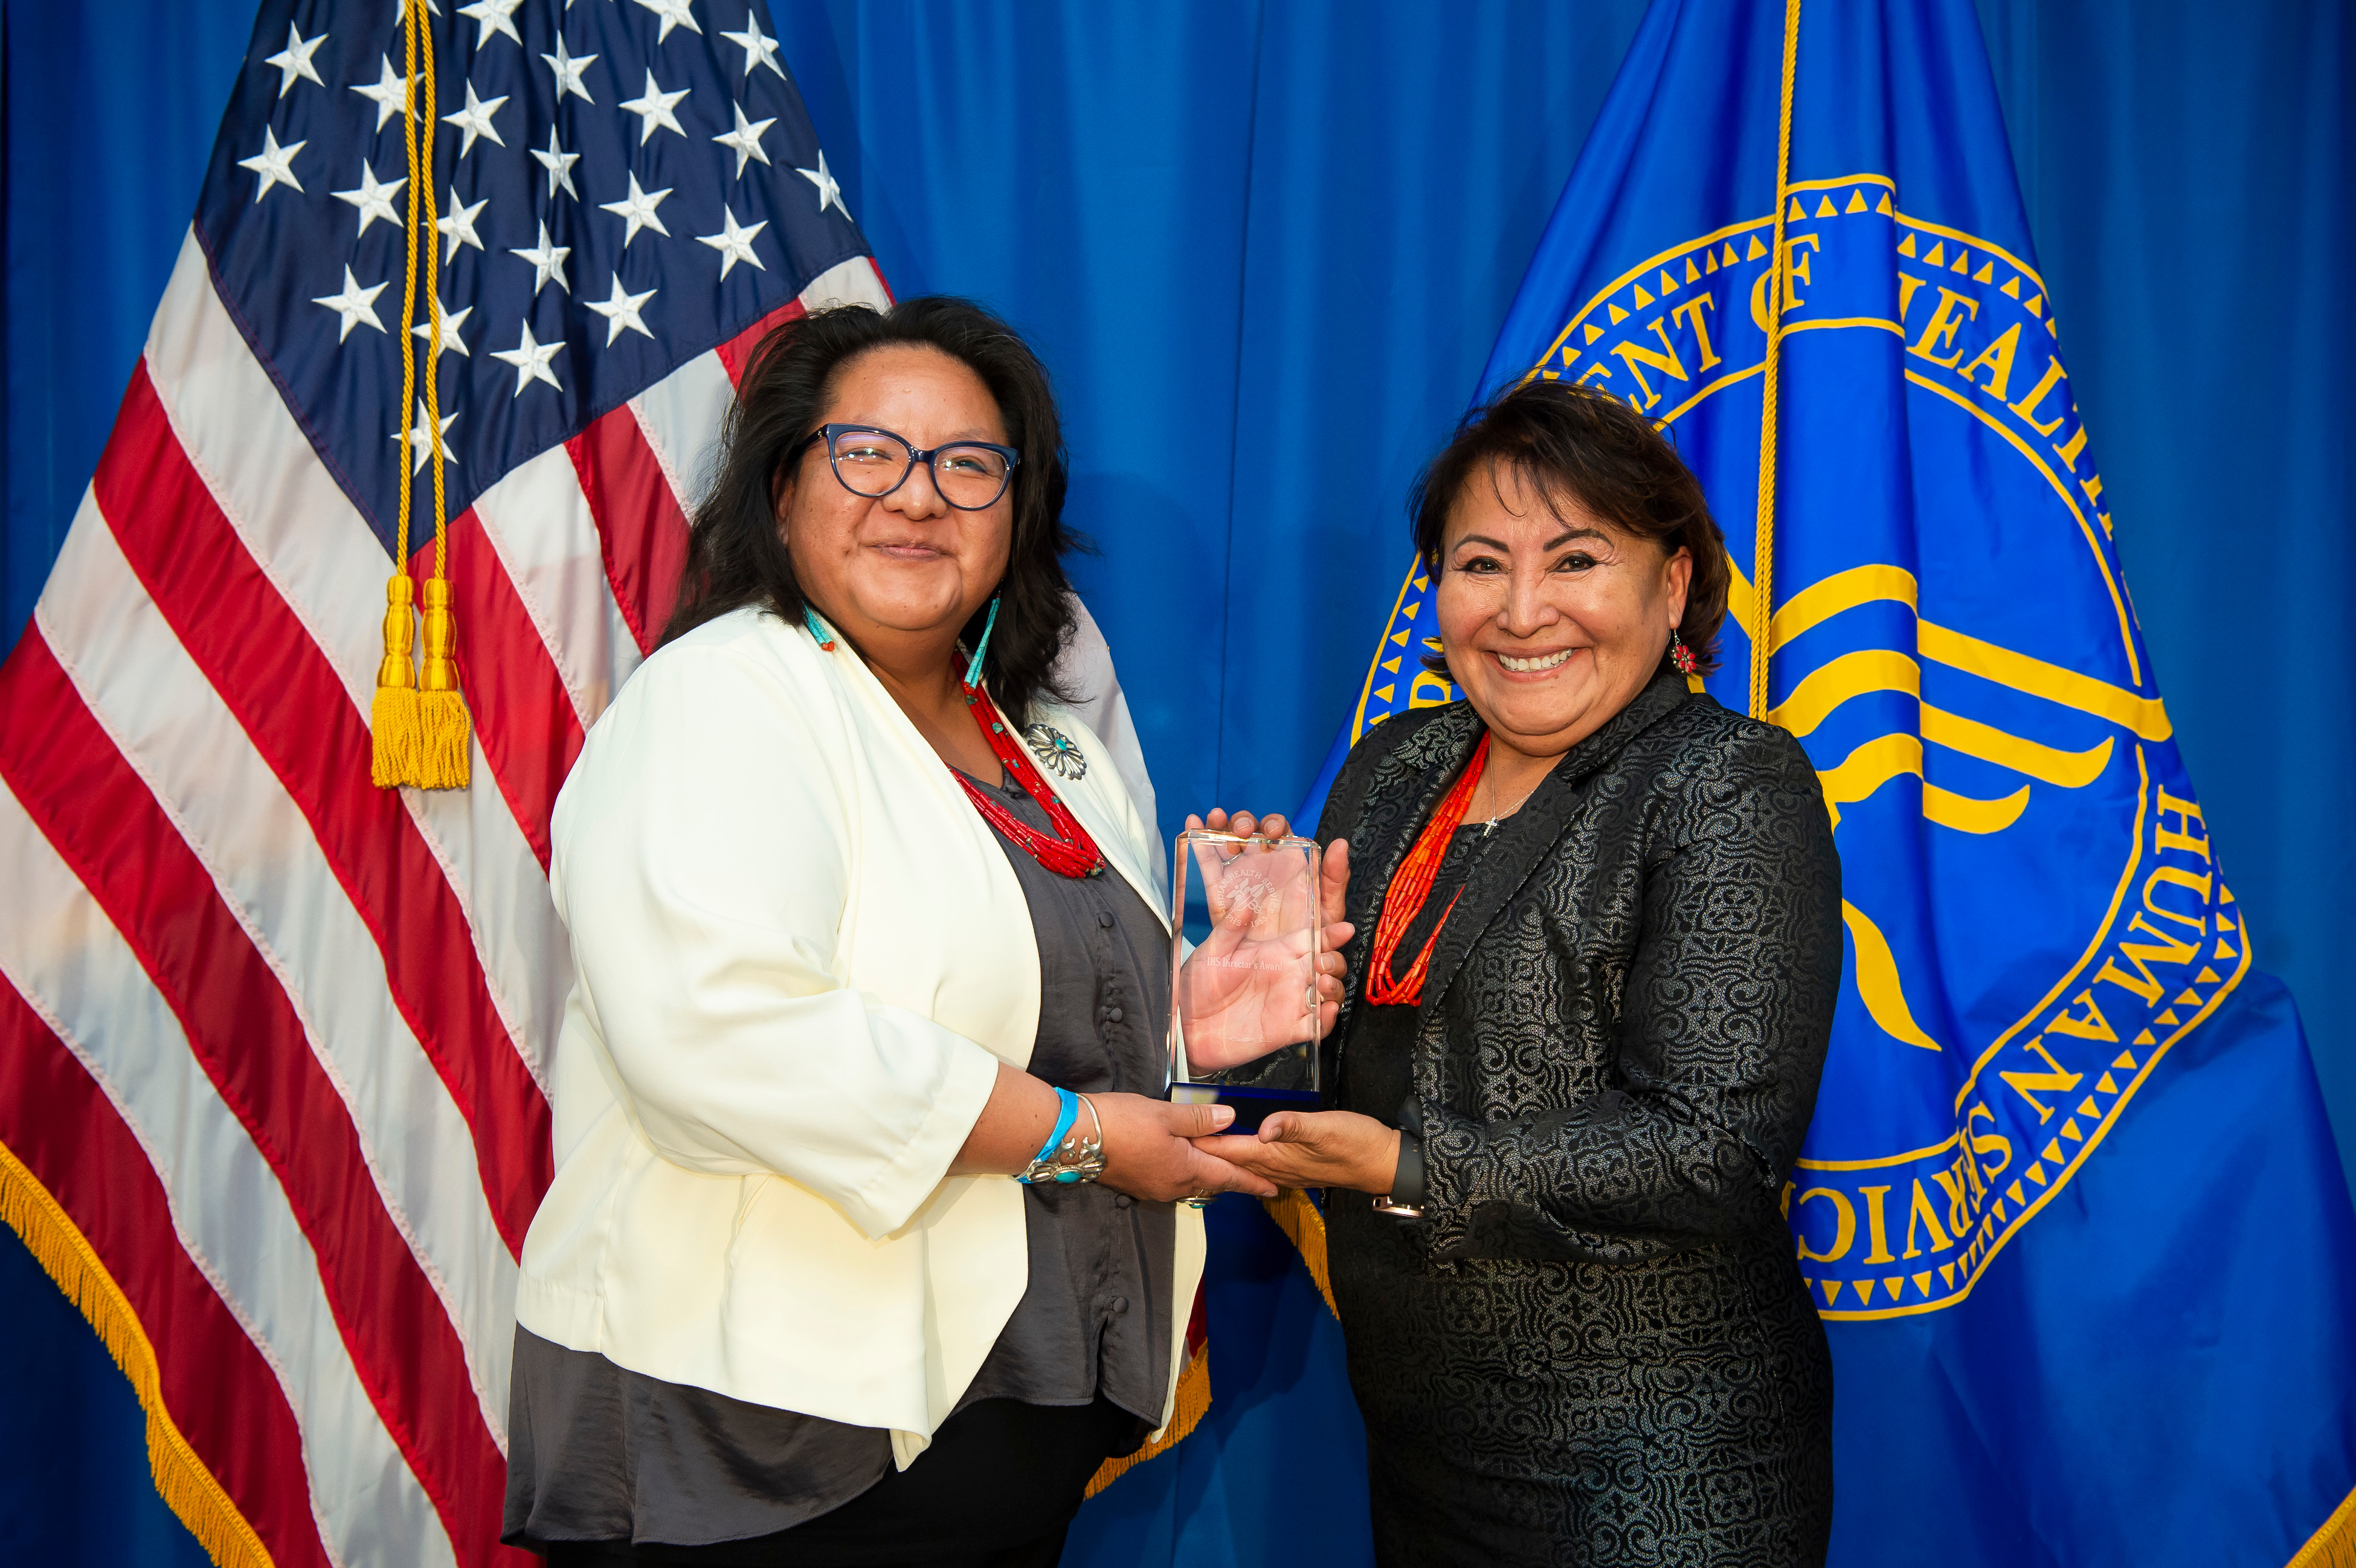 Director's Award - Individual Category - Soon-Wy Taylor (Navajo)